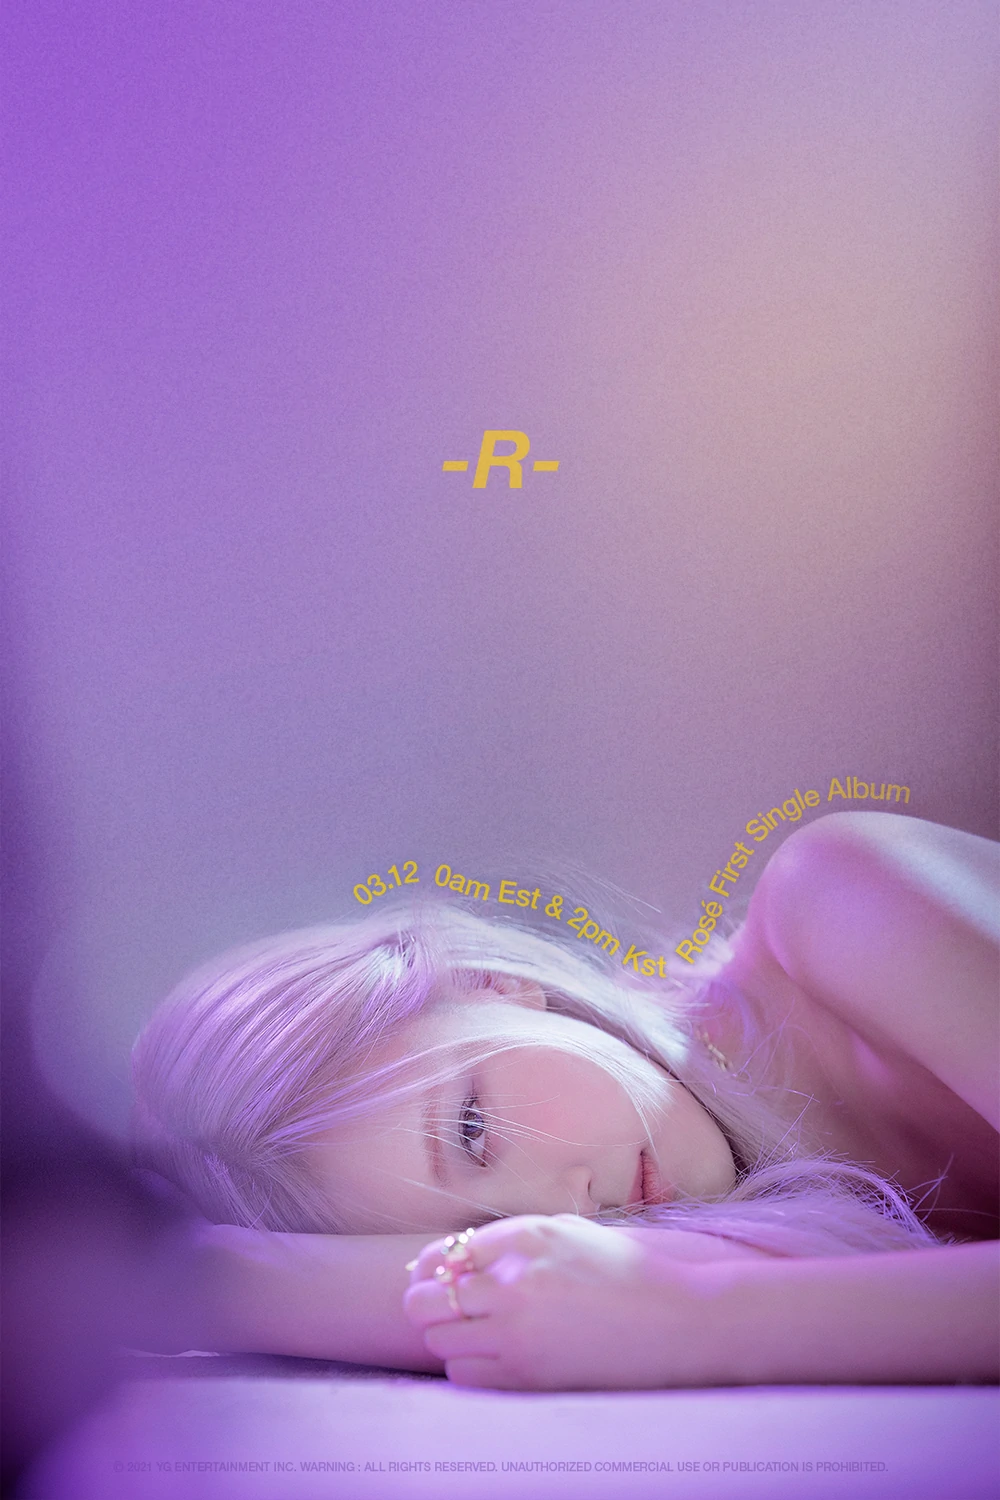 Blackpink -R- Rose Concept Teaser Picture Image Photo Kpop K-Concept 3